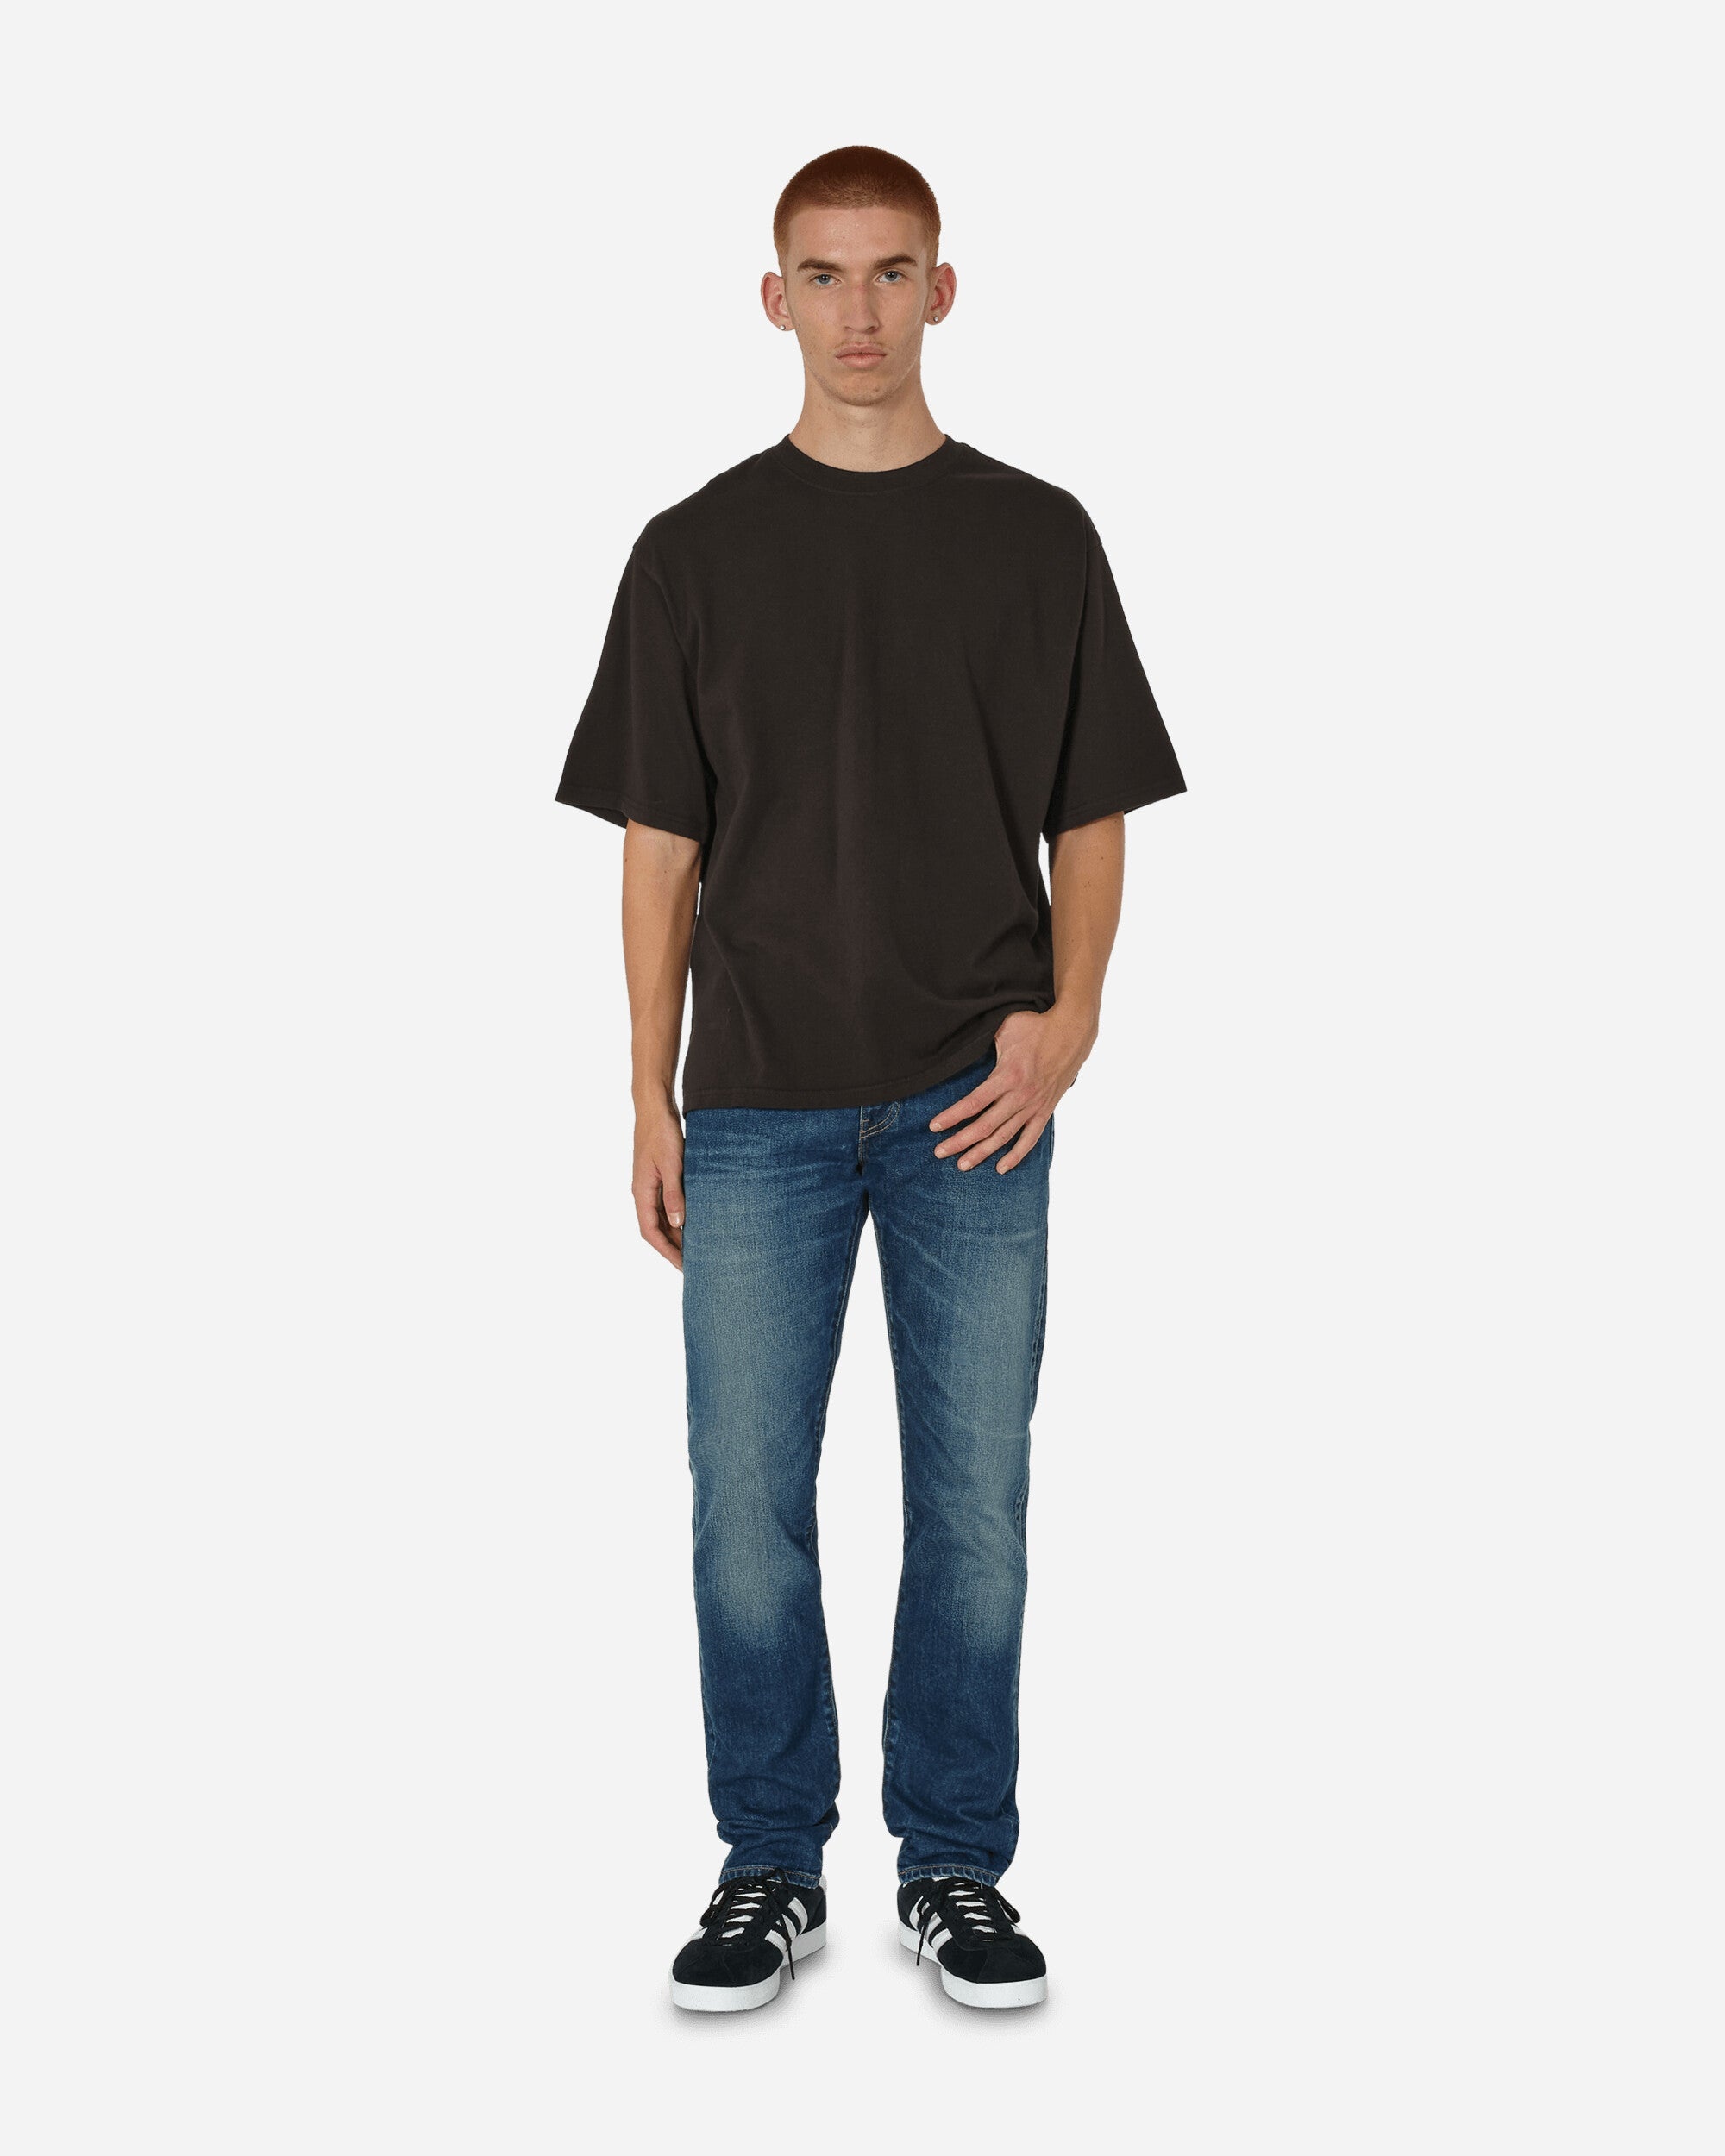 The Half Sleeve T-Shirt Black - 4